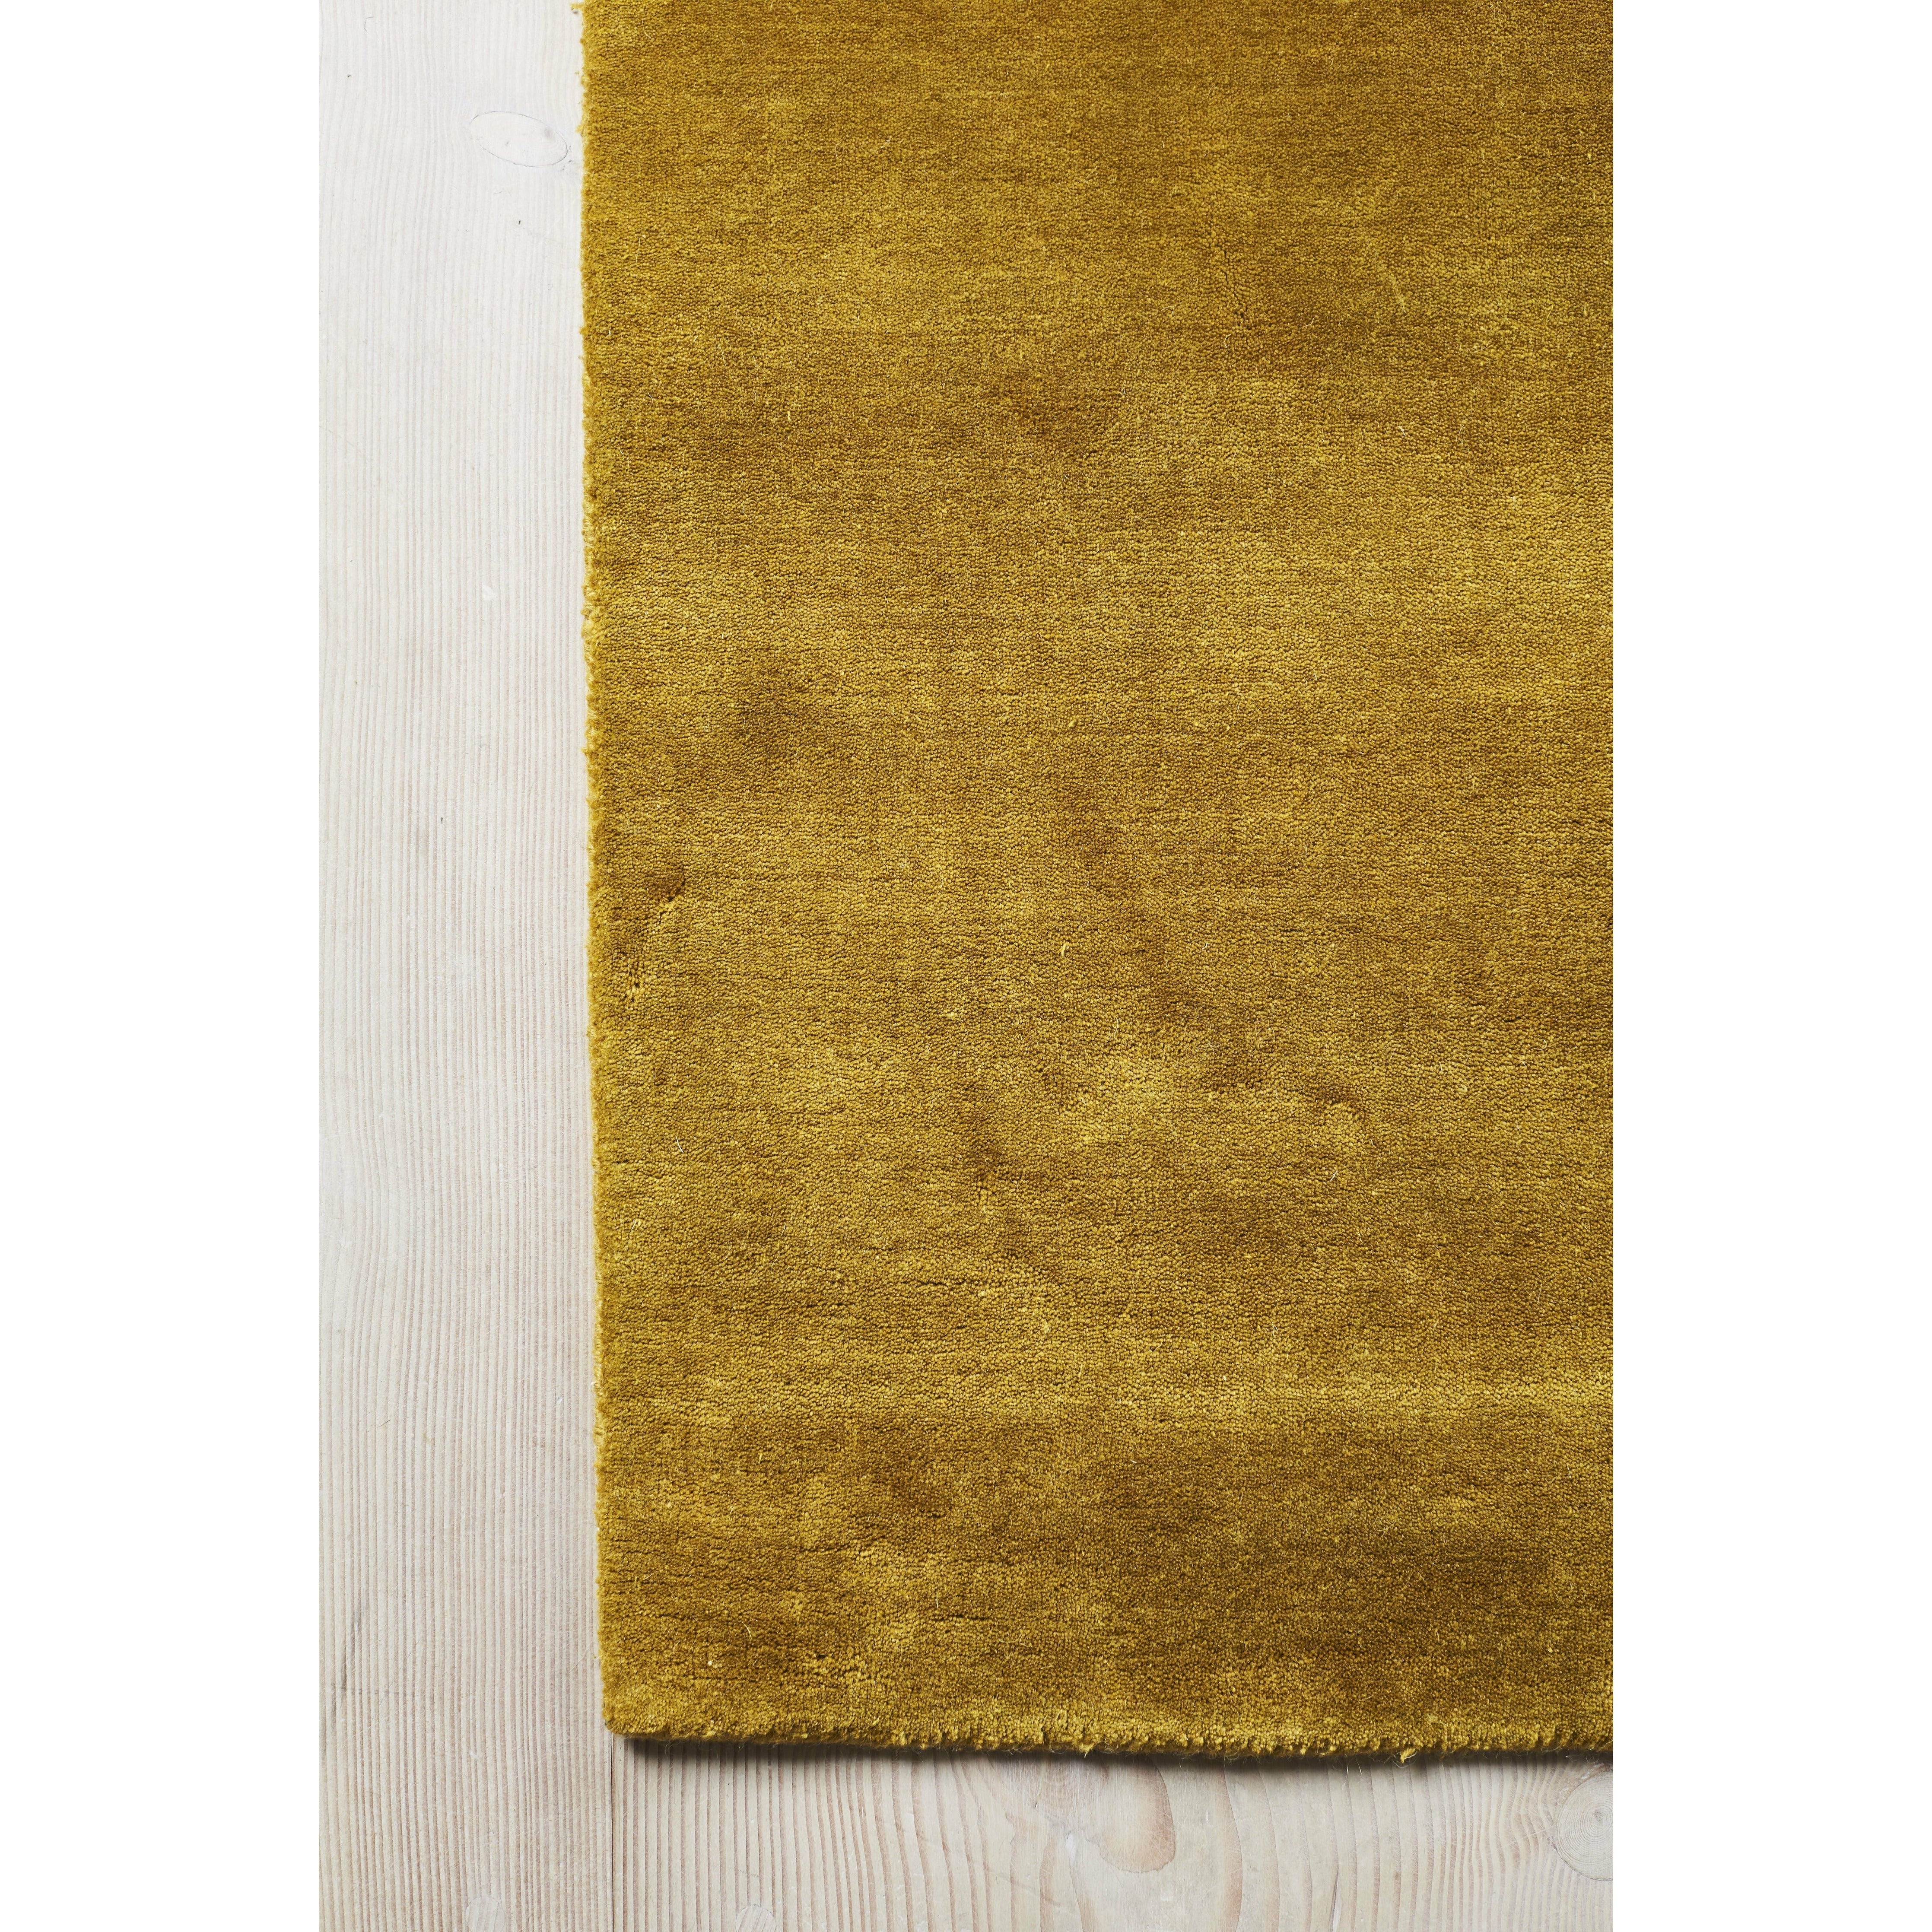 Massimo Earth Bambus Teppich Chinesisch Gelb, 170x240 cm